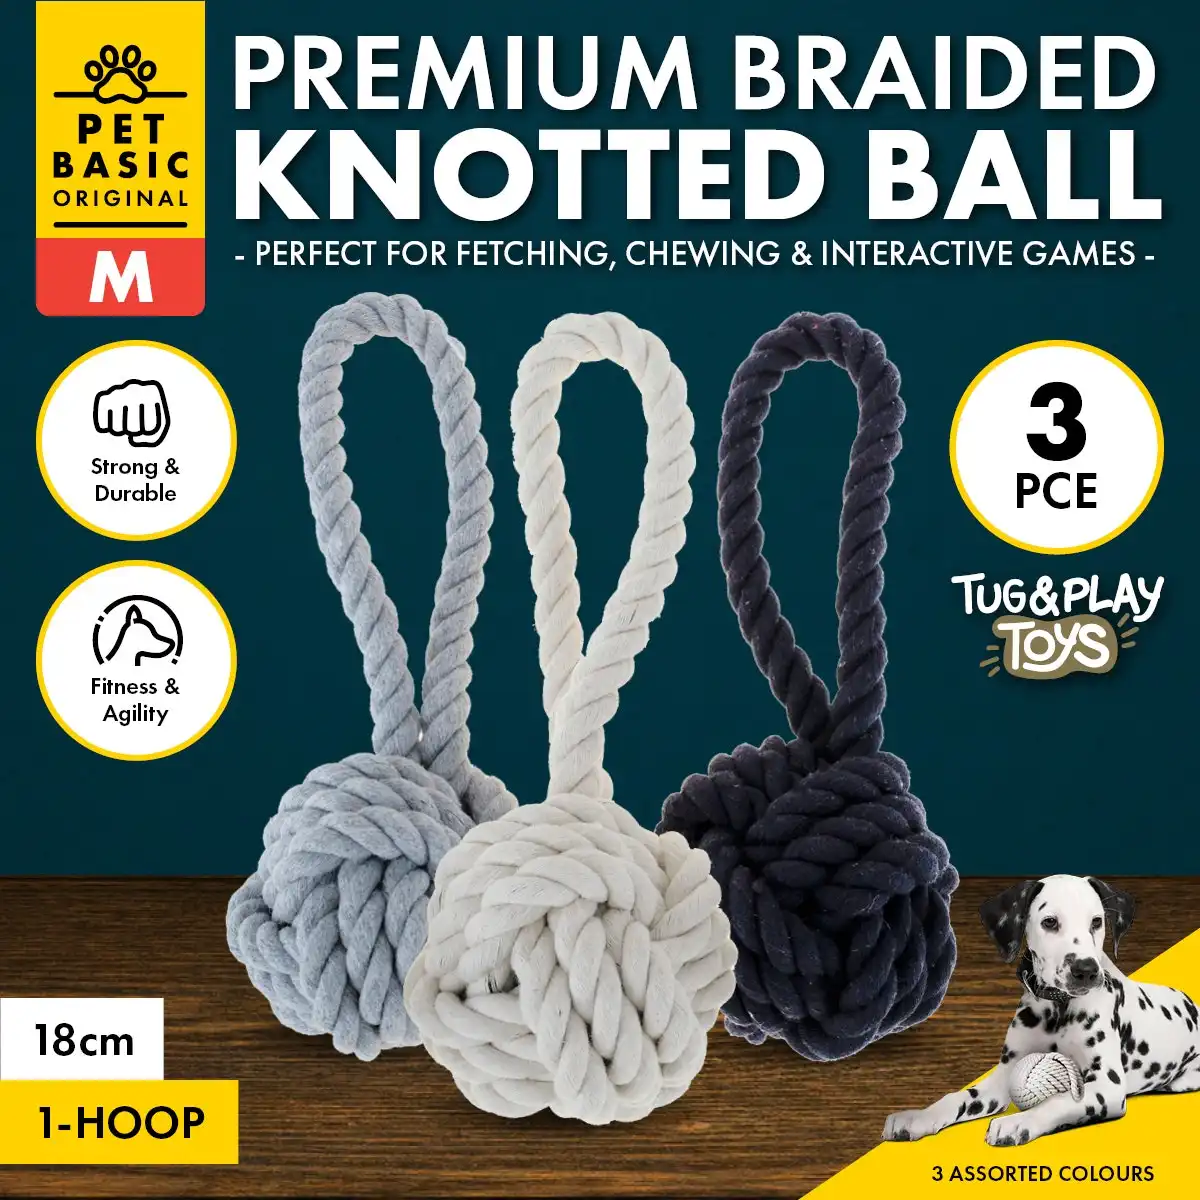 Pet Basic® 3PCE Premium Braided Rope Knotted Ball Medium Natural Fibres 18cm